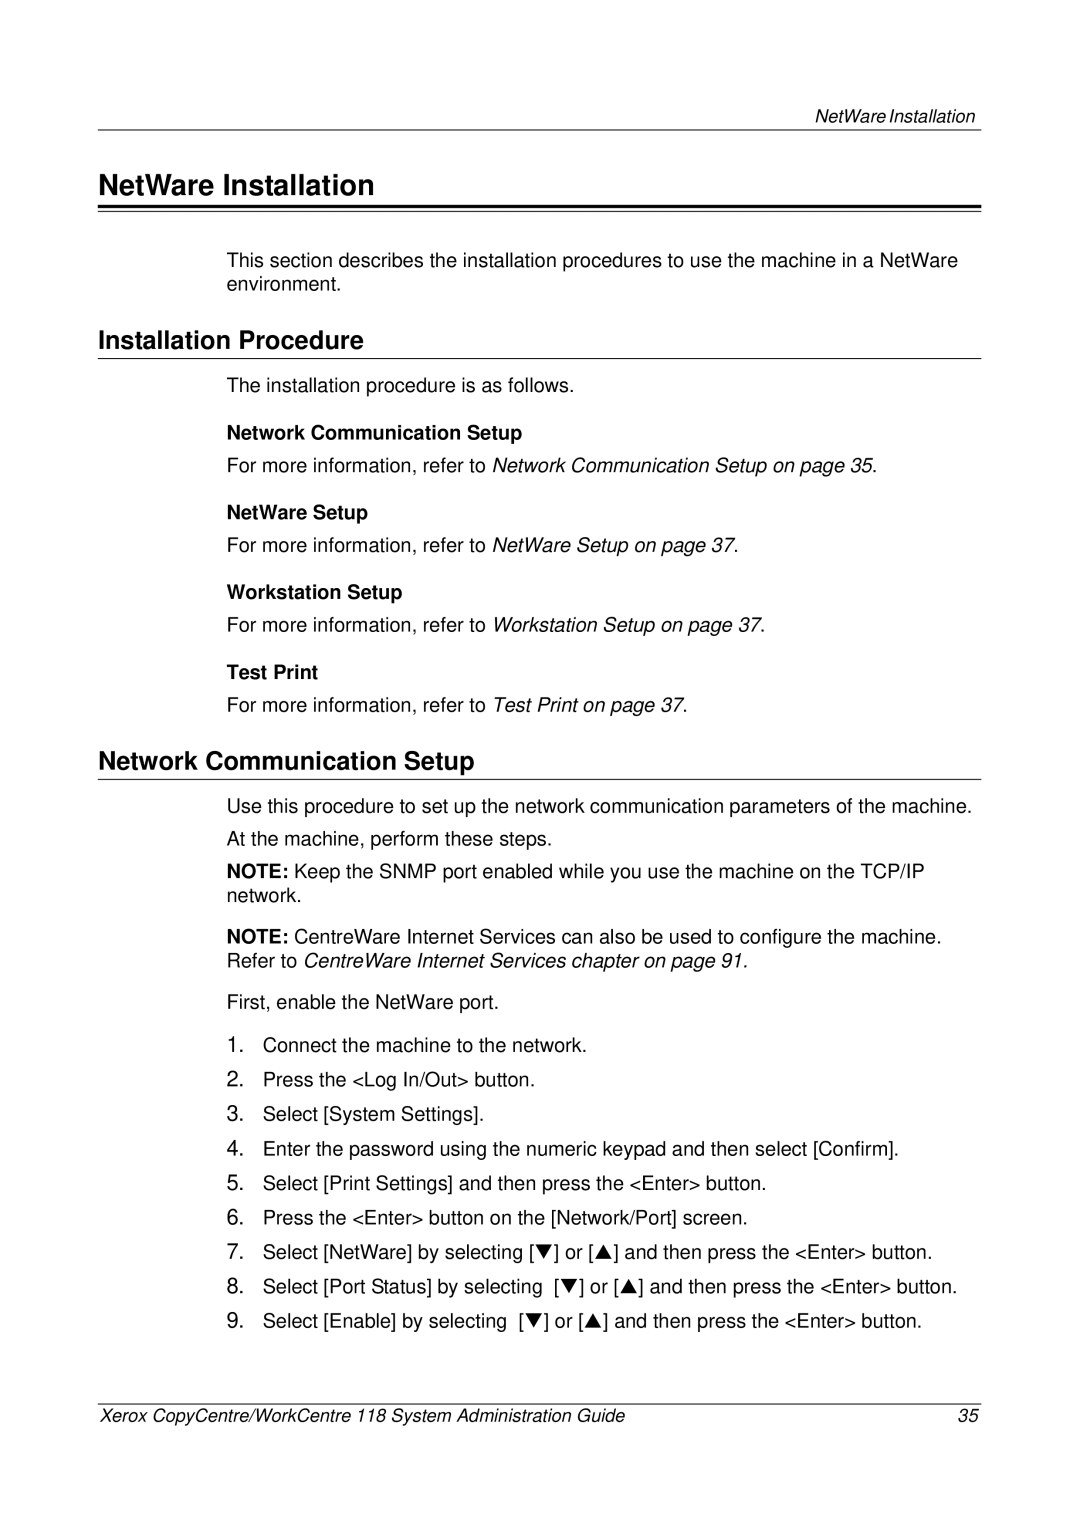 Xerox 701P42722_EN manual NetWare Installation, Installation Procedure, Network Communication Setup 